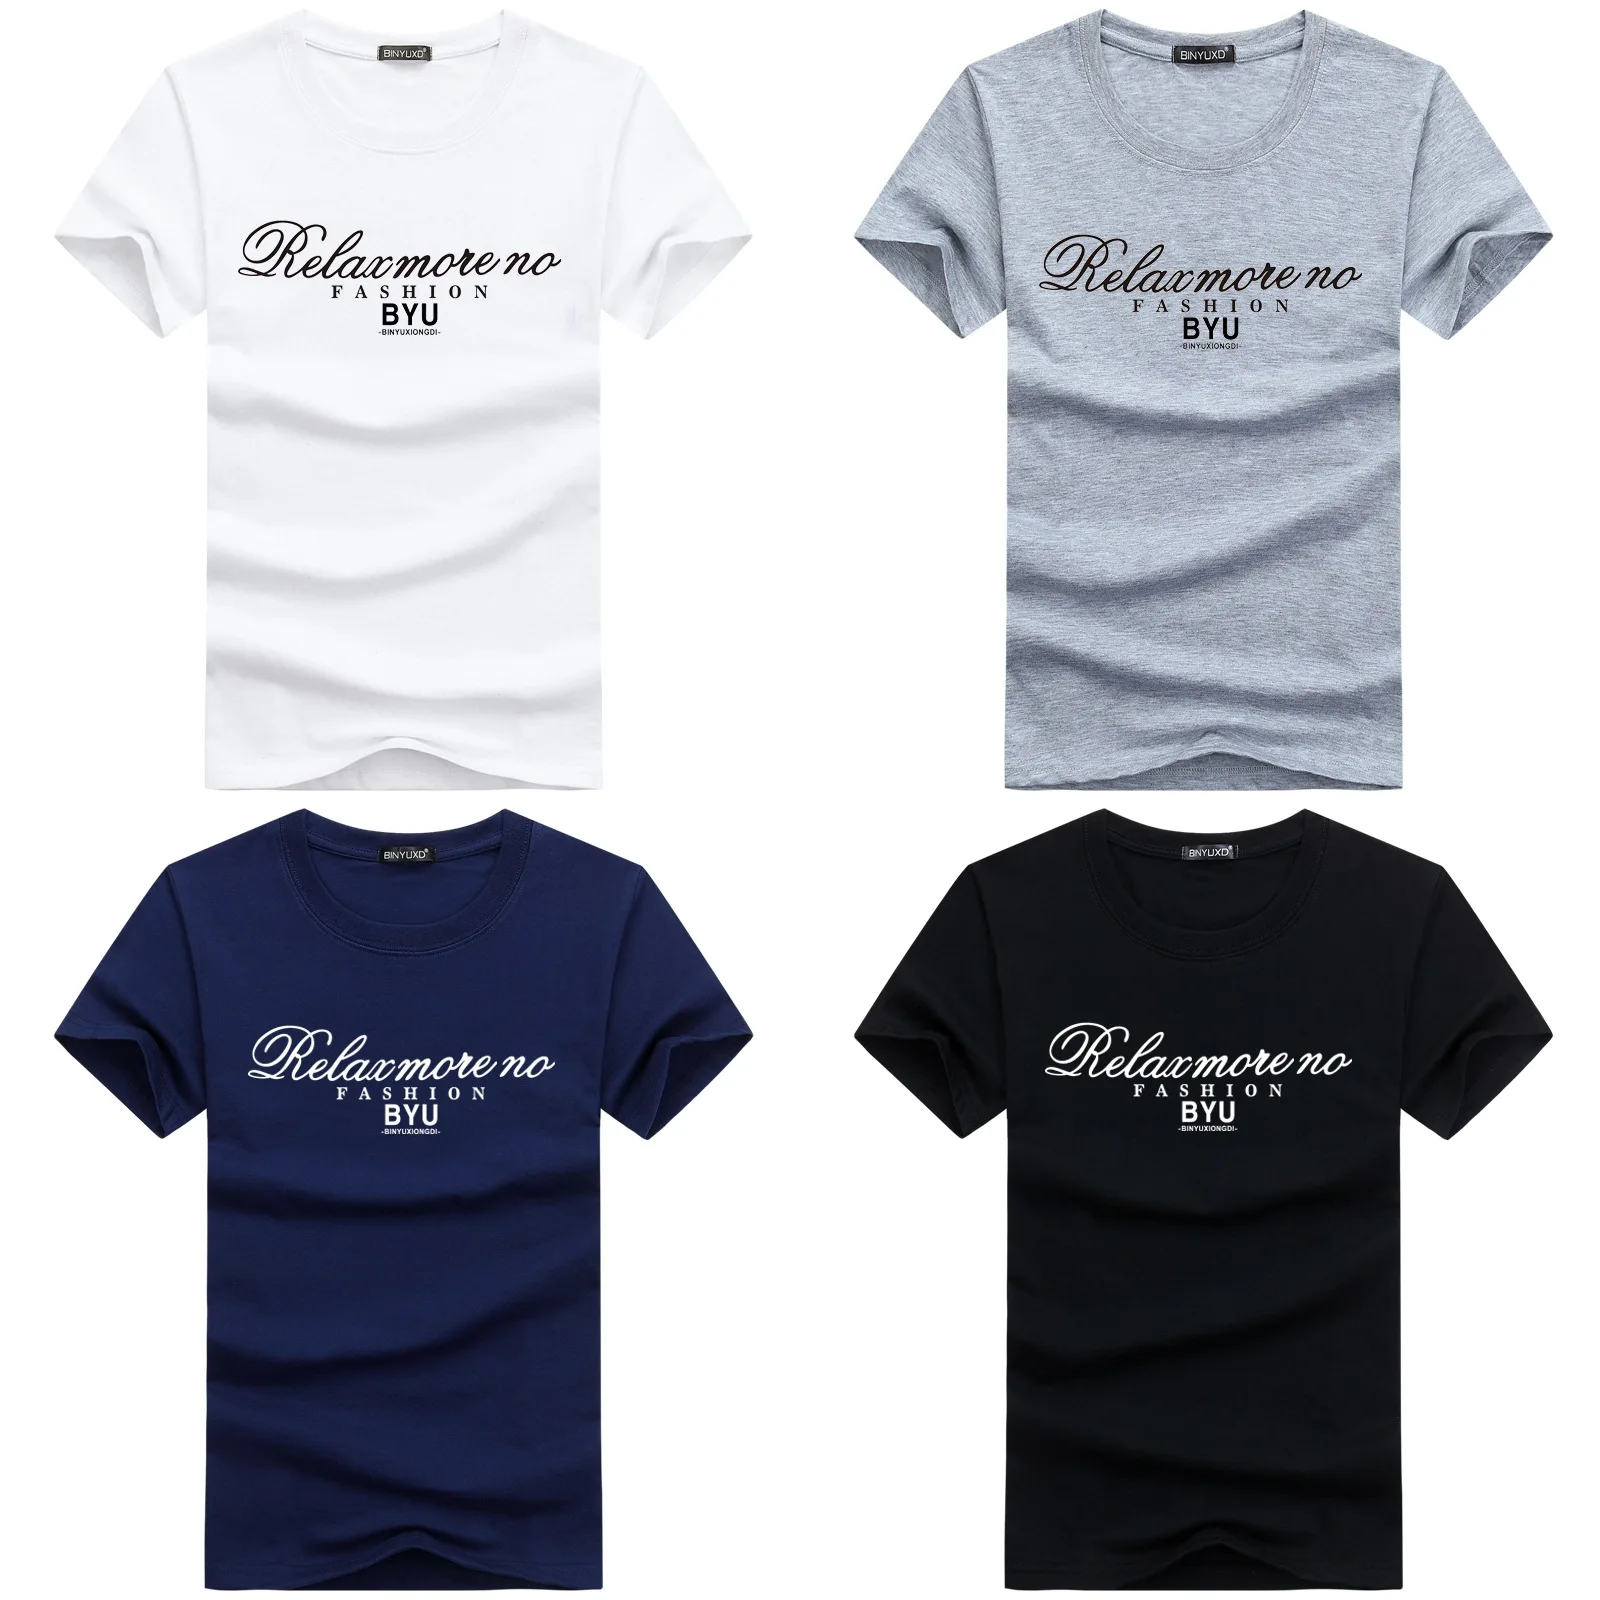 

10030 Camiseta Harajuku love para mujer, camiseta femenina para mujer, camisetas gráulzzang para mujer, verano 2019, ropa